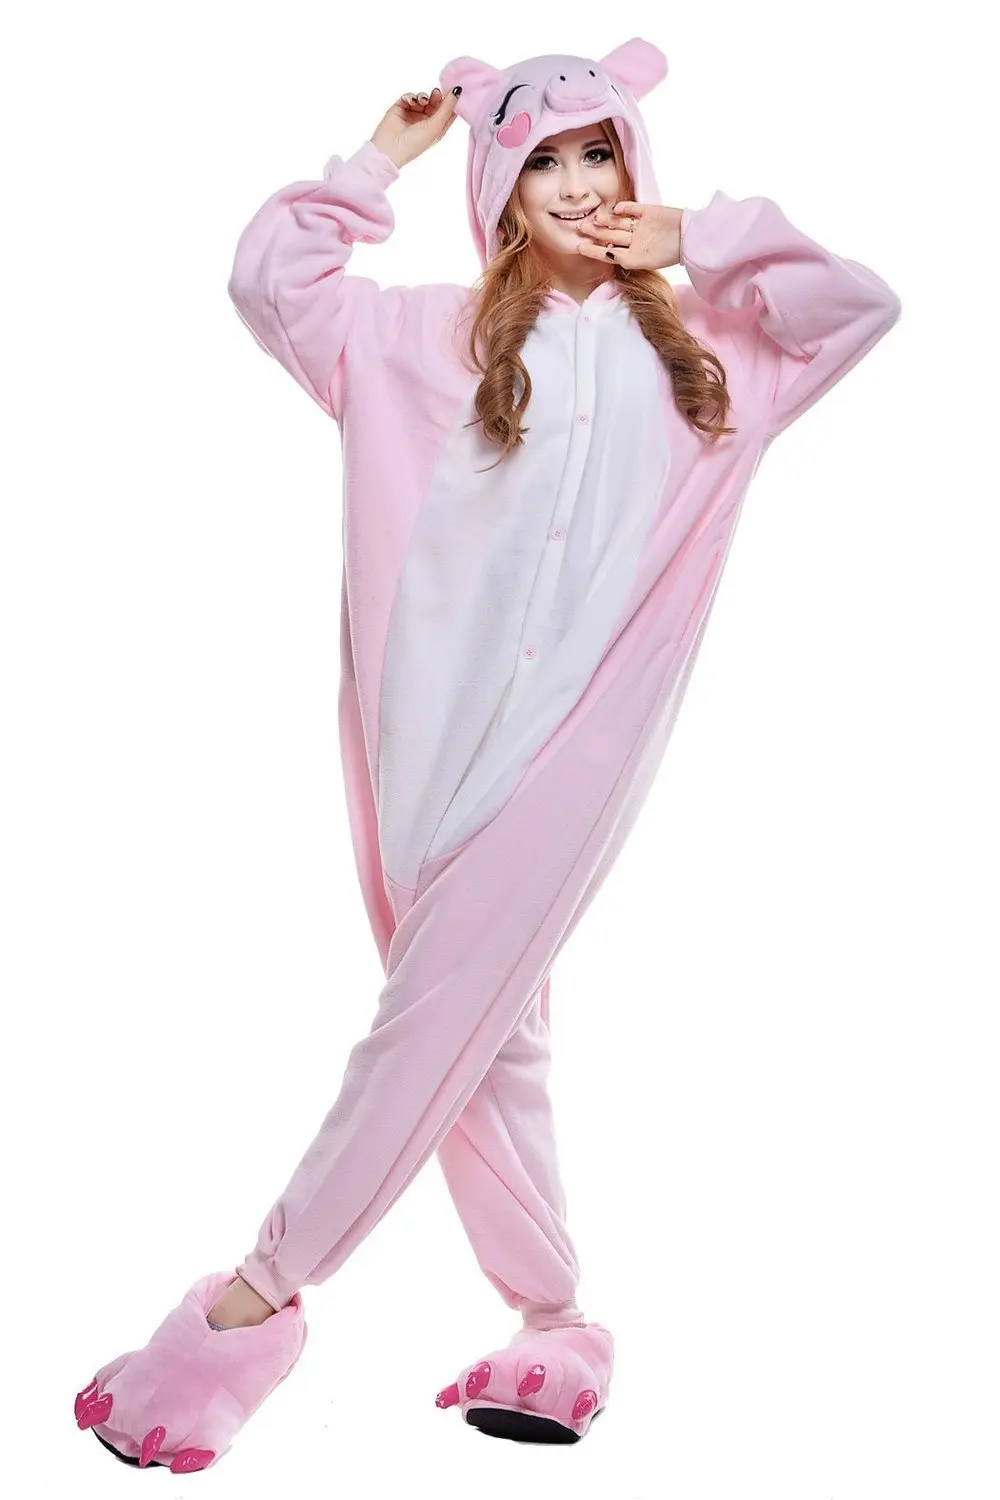 dressfan Unisex Adult Animal Pajamas Pink Pig Cosplay Costume 